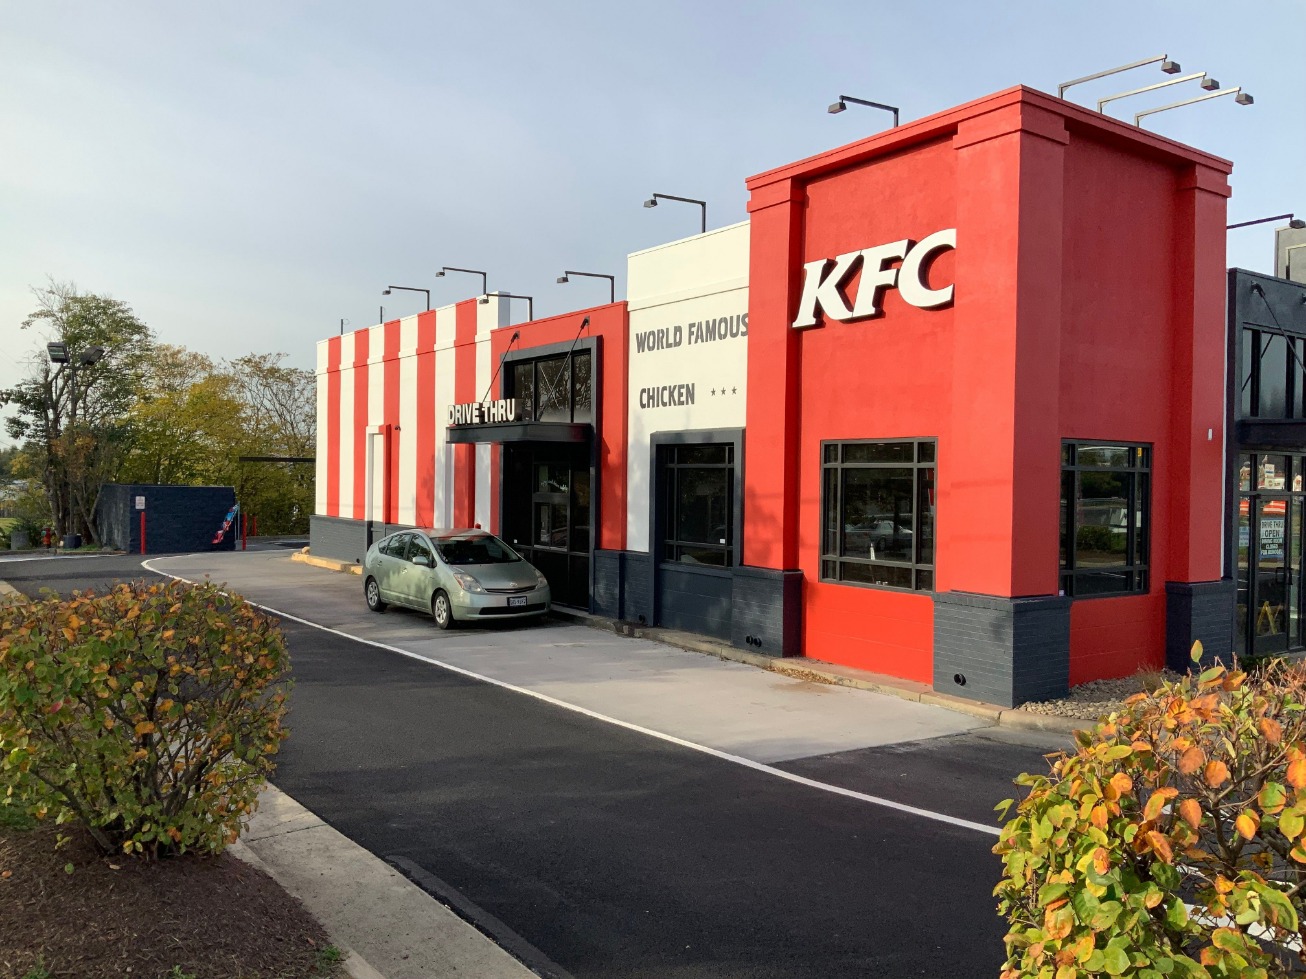 World famous KFC